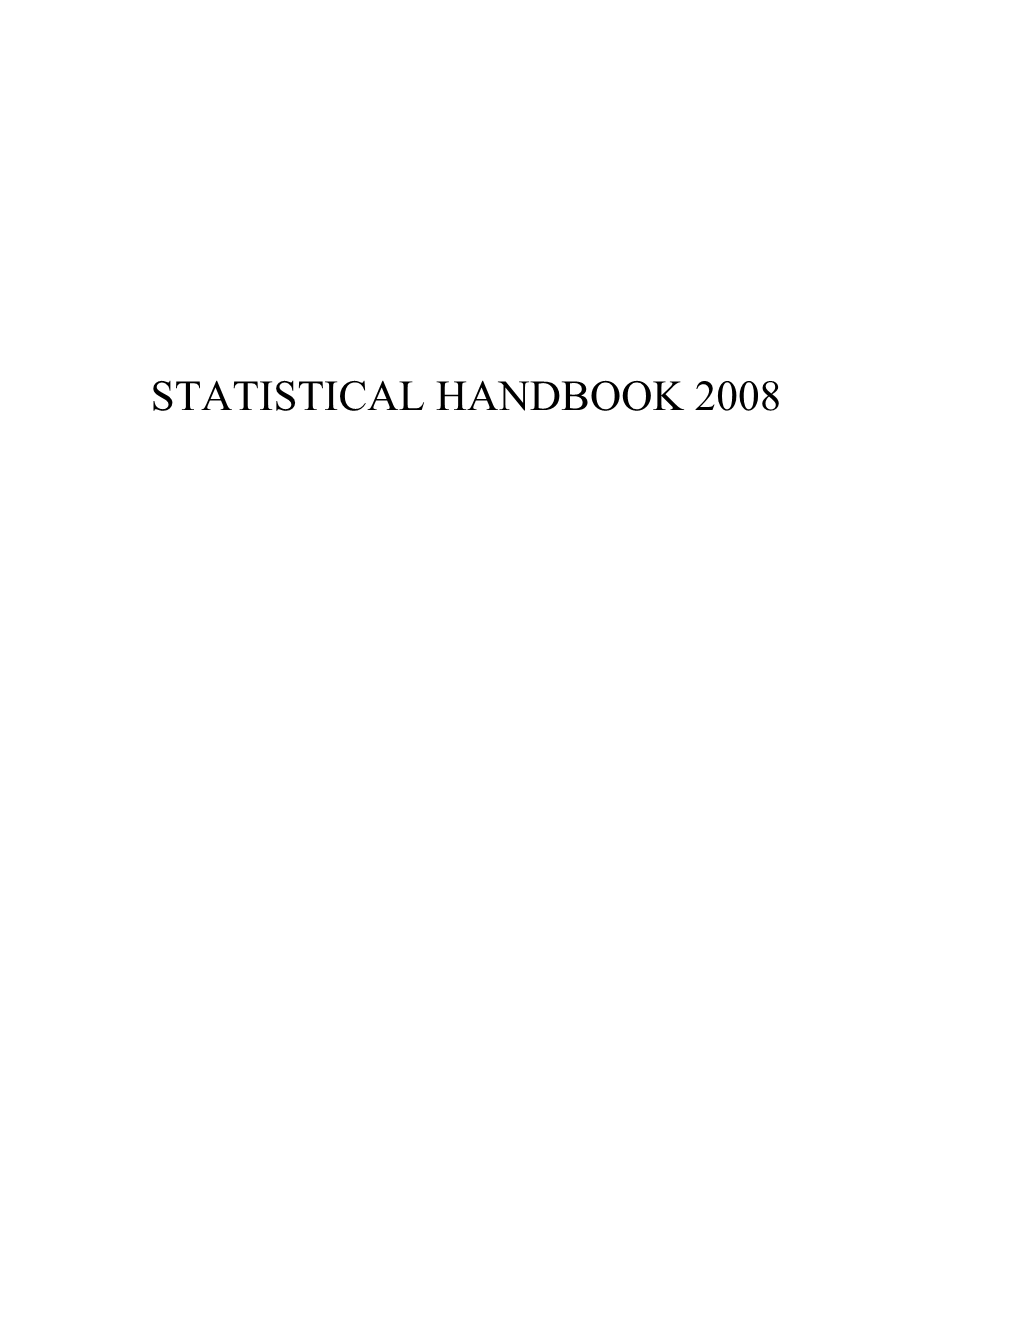 Statistical Handbook 2008